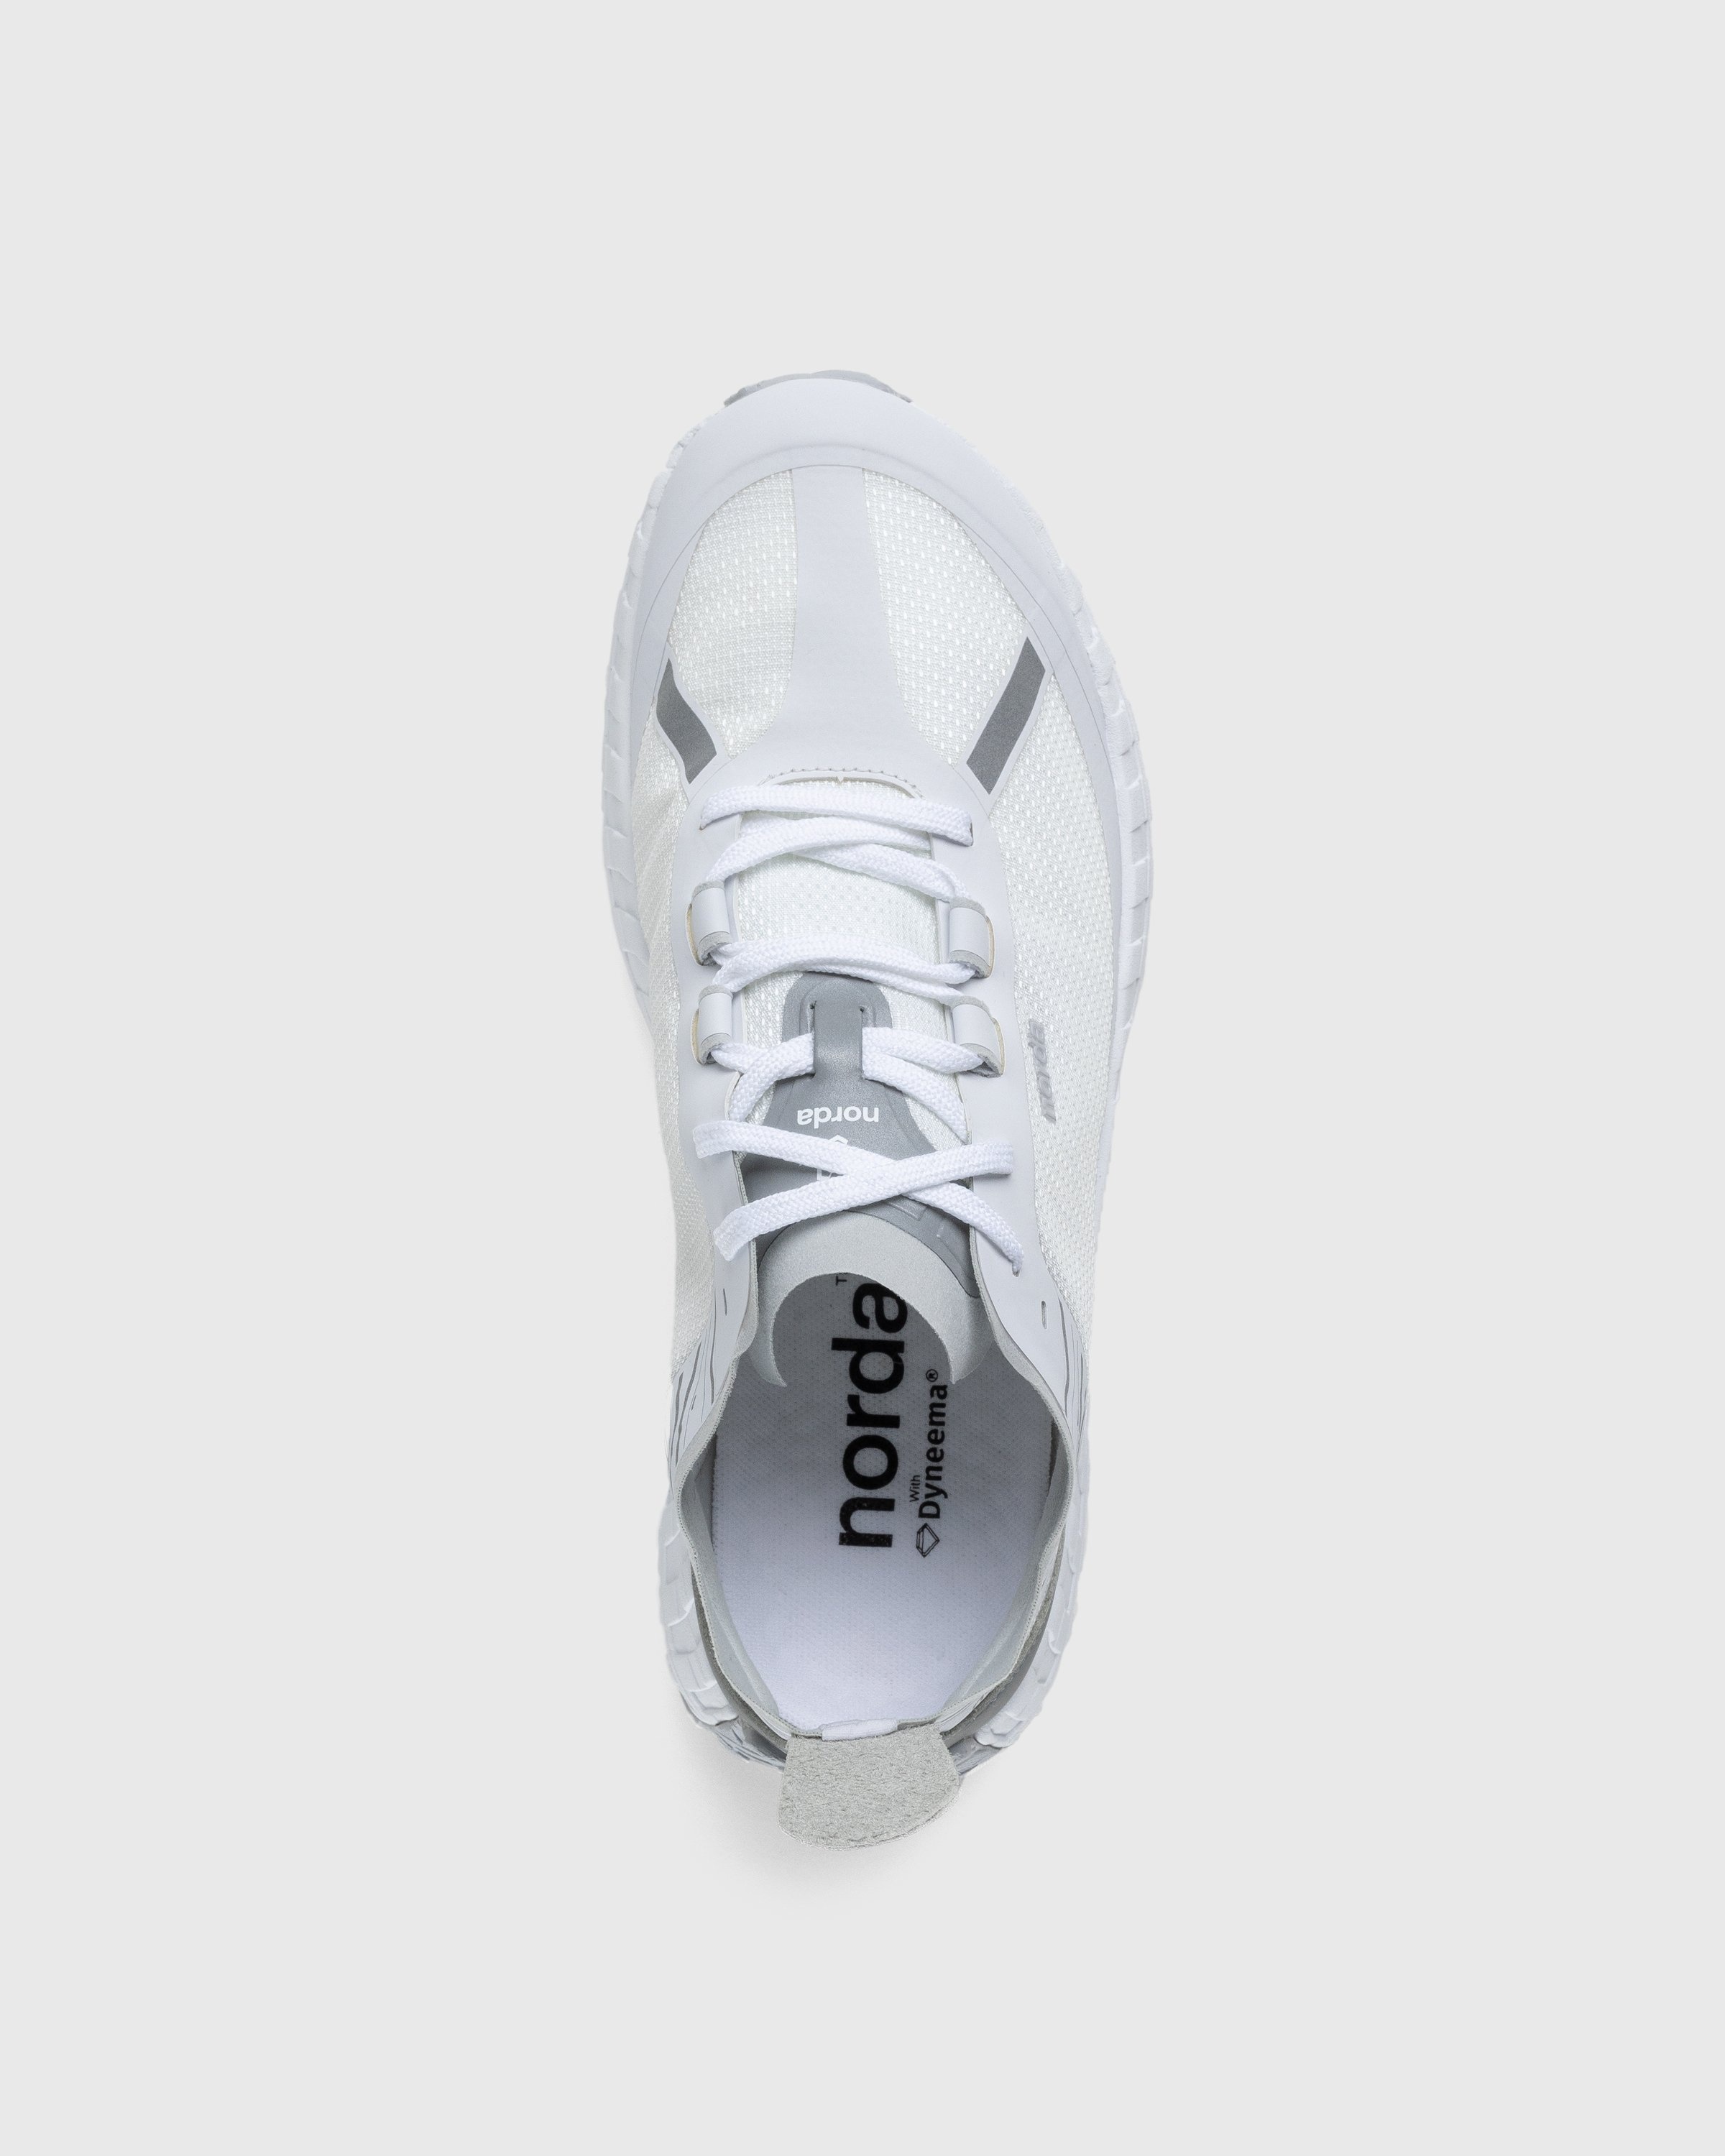 Norda – 001 M White/Grey - Low Top Sneakers - White - Image 5